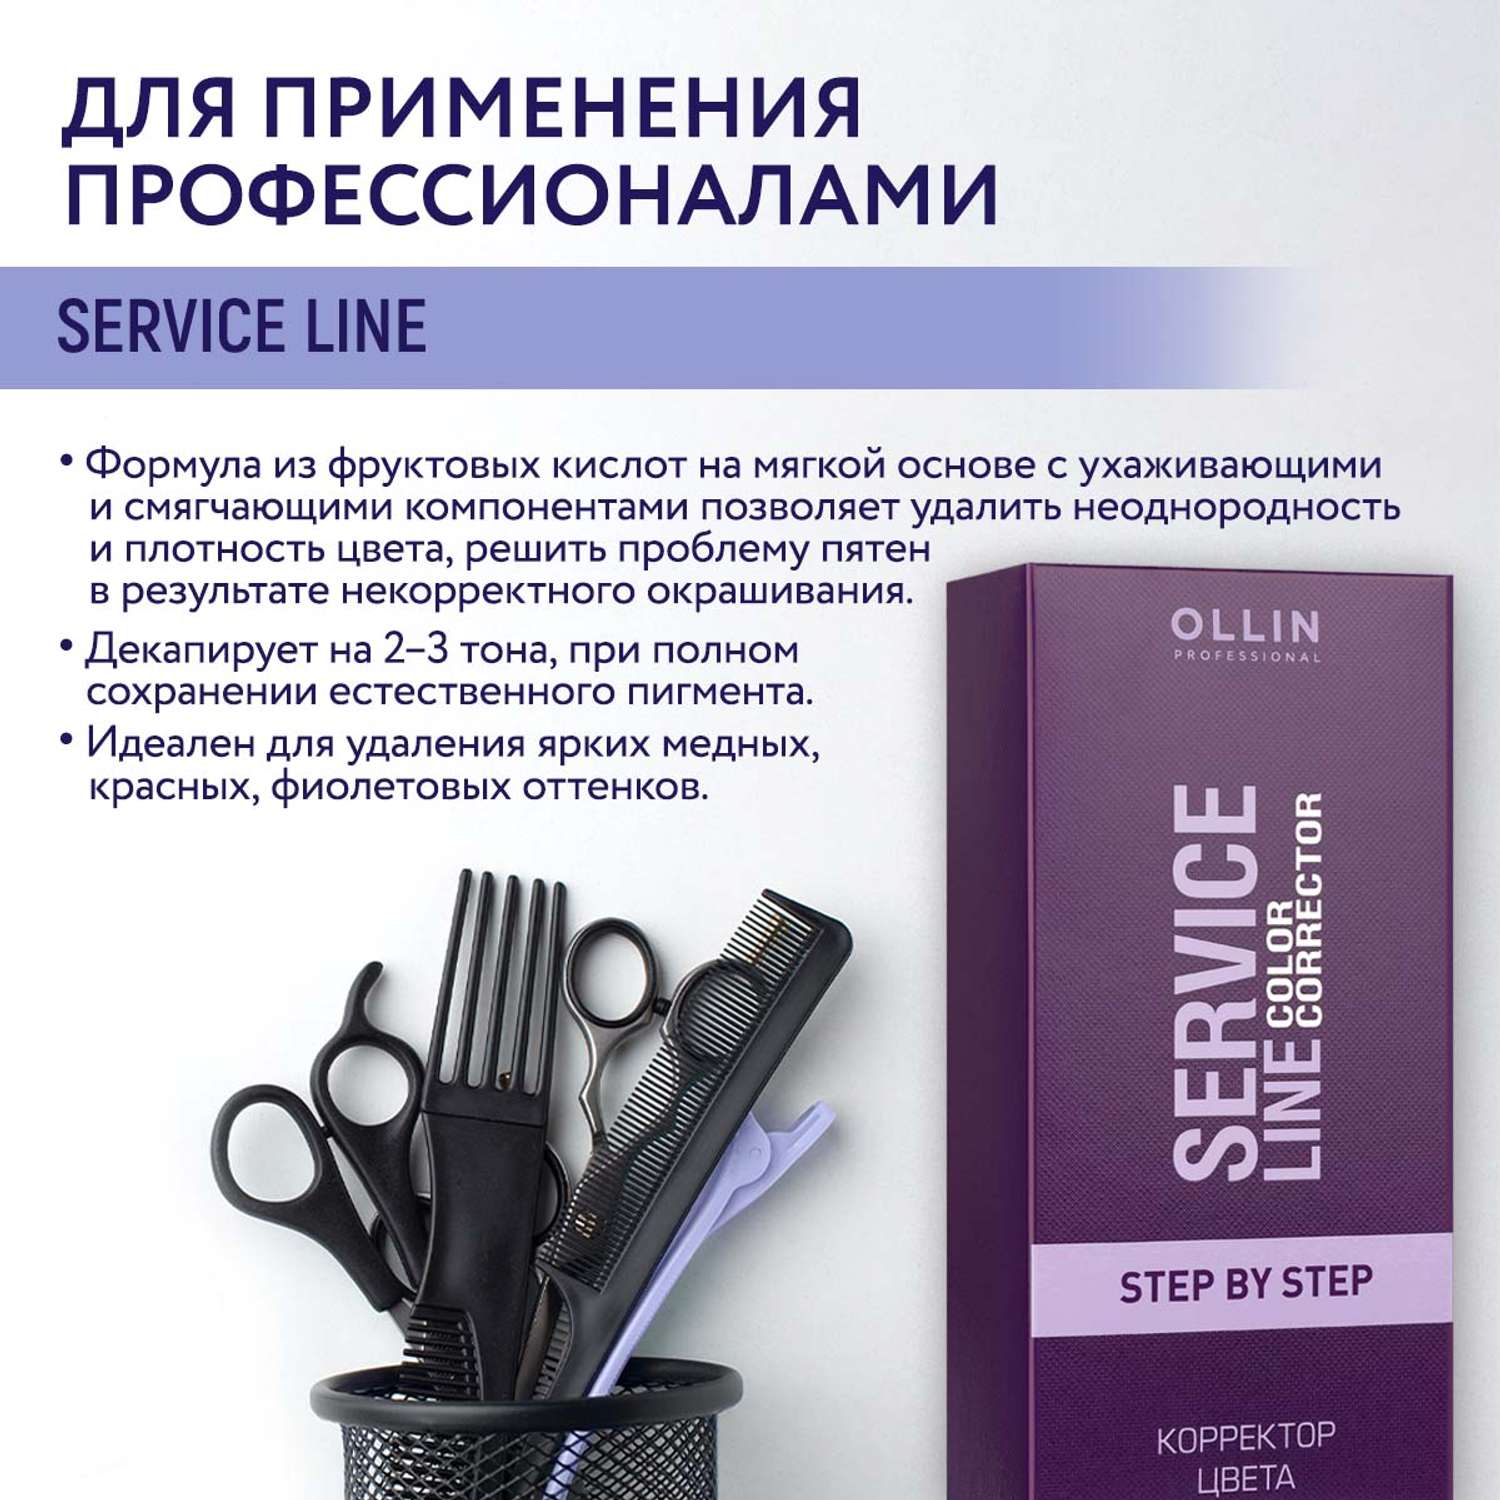 Корректор цвета Ollin SERVICE LINE для волос step by step 2*100 мл - фото 2